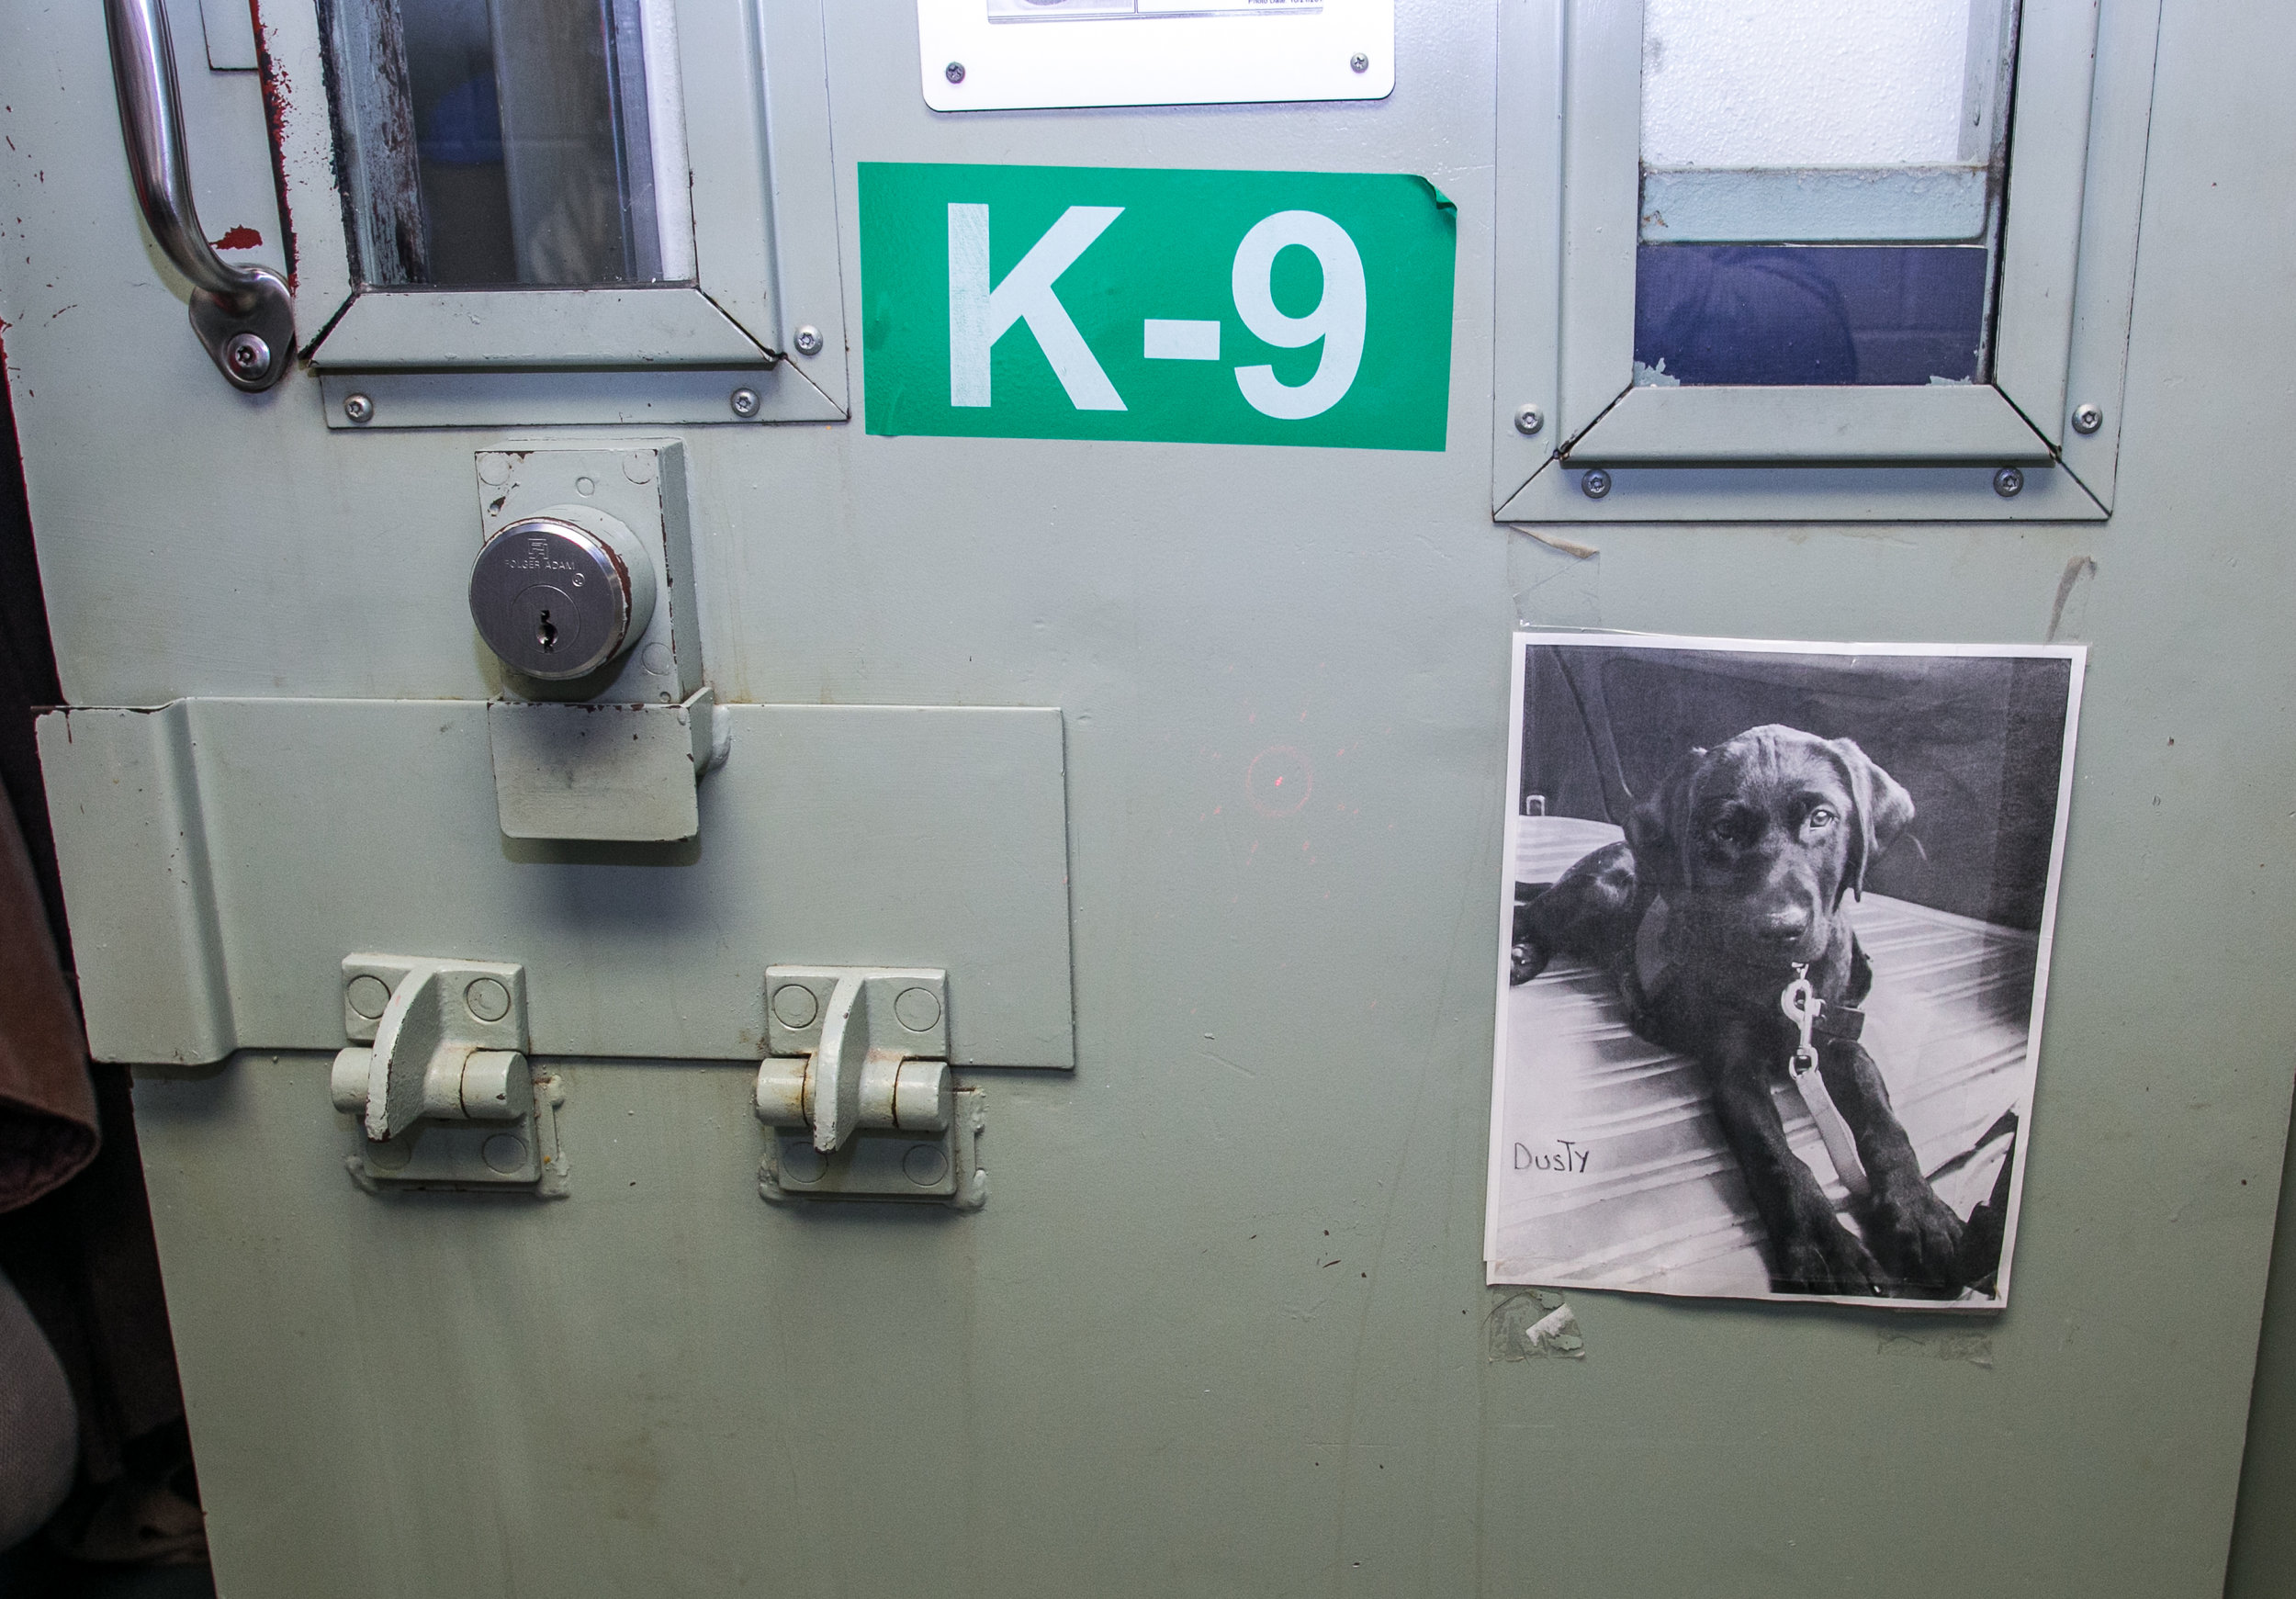  Nike's photo taped to Ralph’s door below a green K-9 designation sign. 